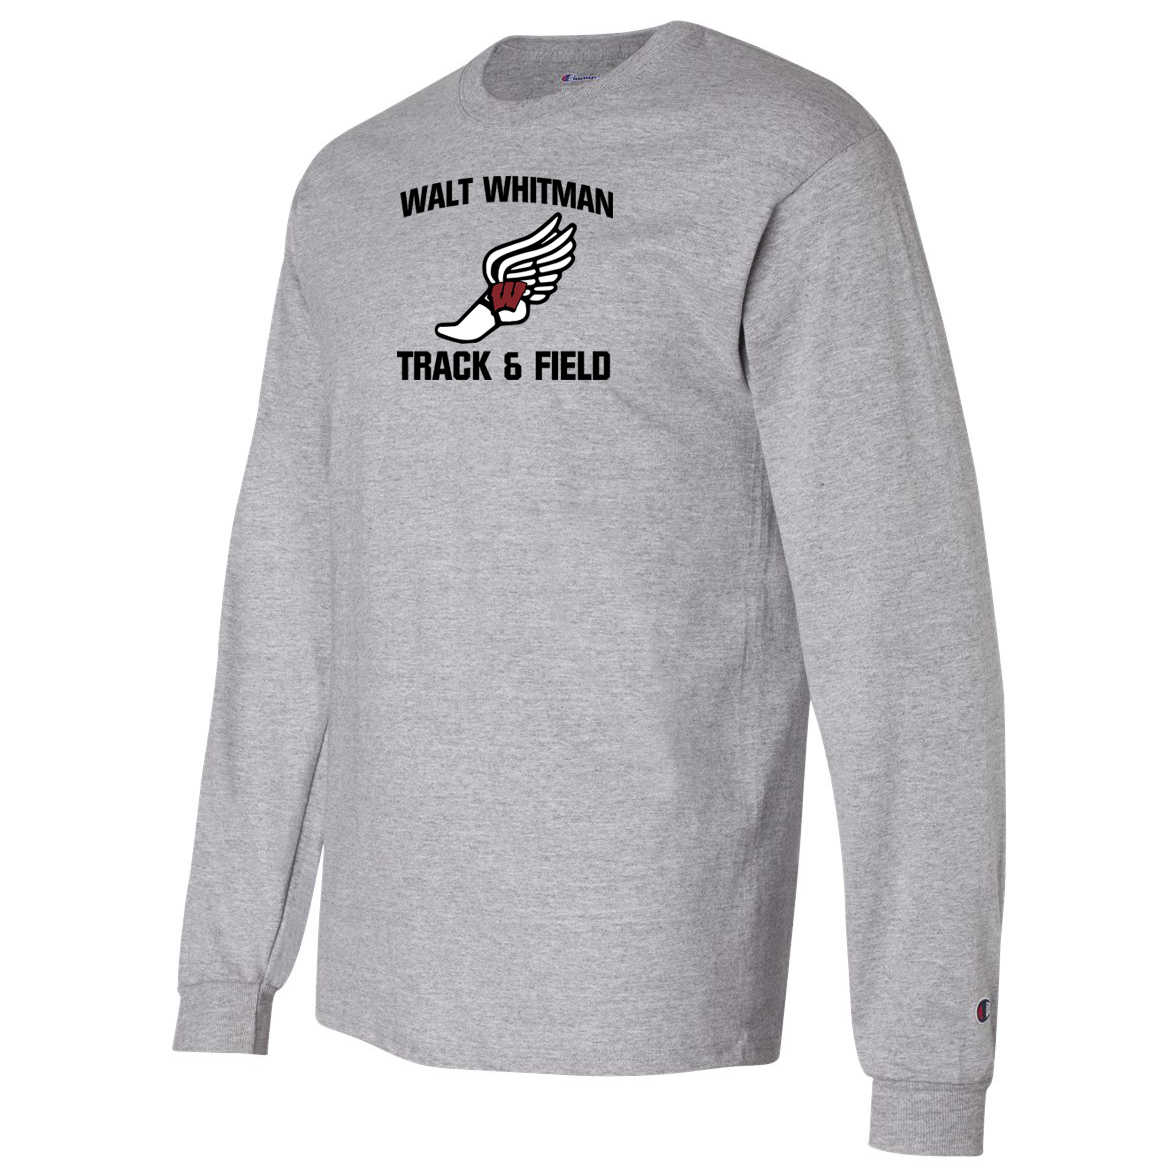 Whitman Track & Field Champion Long Sleeve T-Shirt